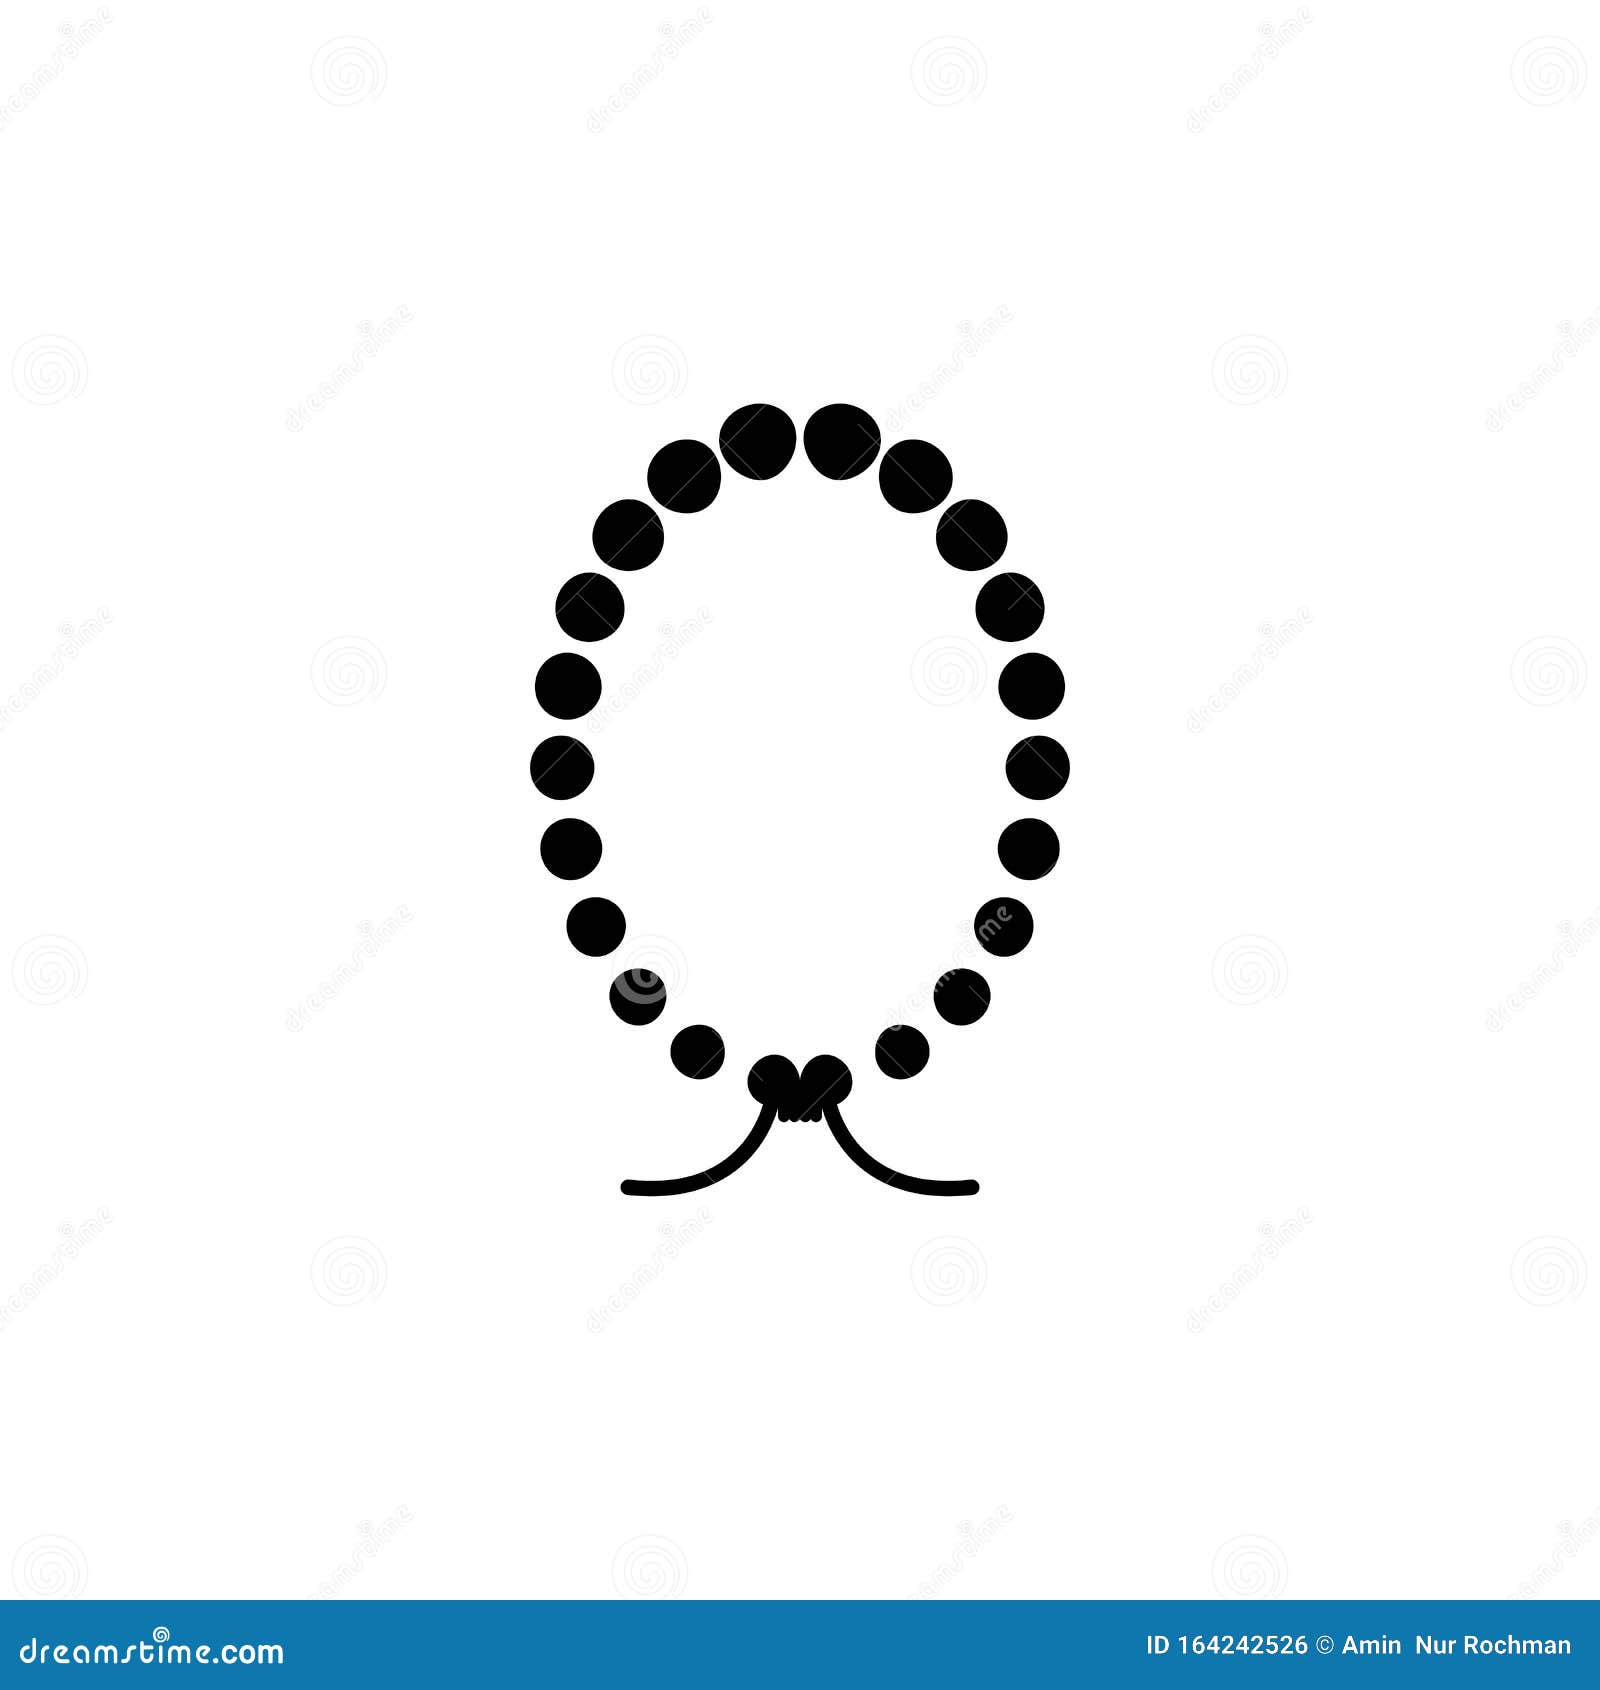 bracelet-icon-trendy-bracelet-logo-concept-on-white-background-from